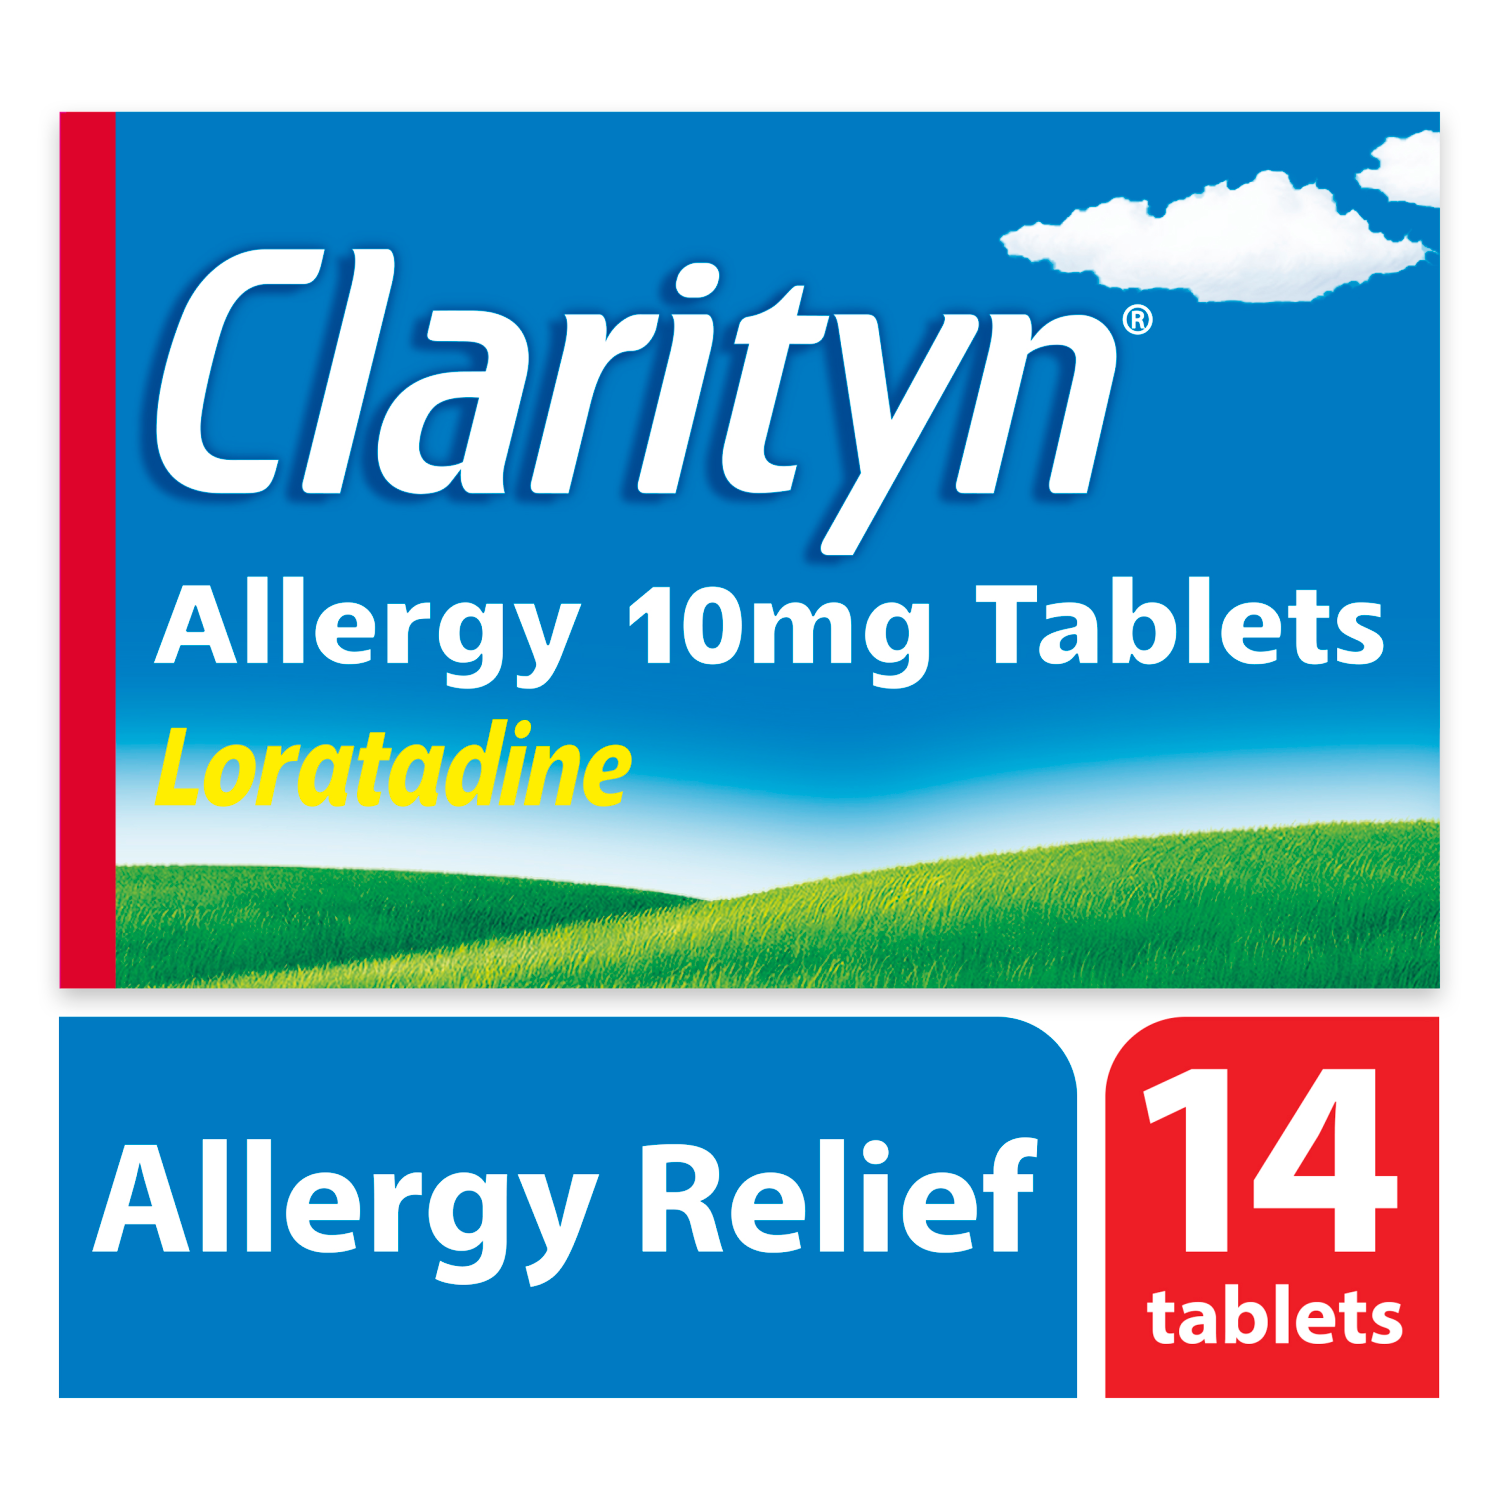 Clarityn Allergy 10mg Tablets 14 tablets